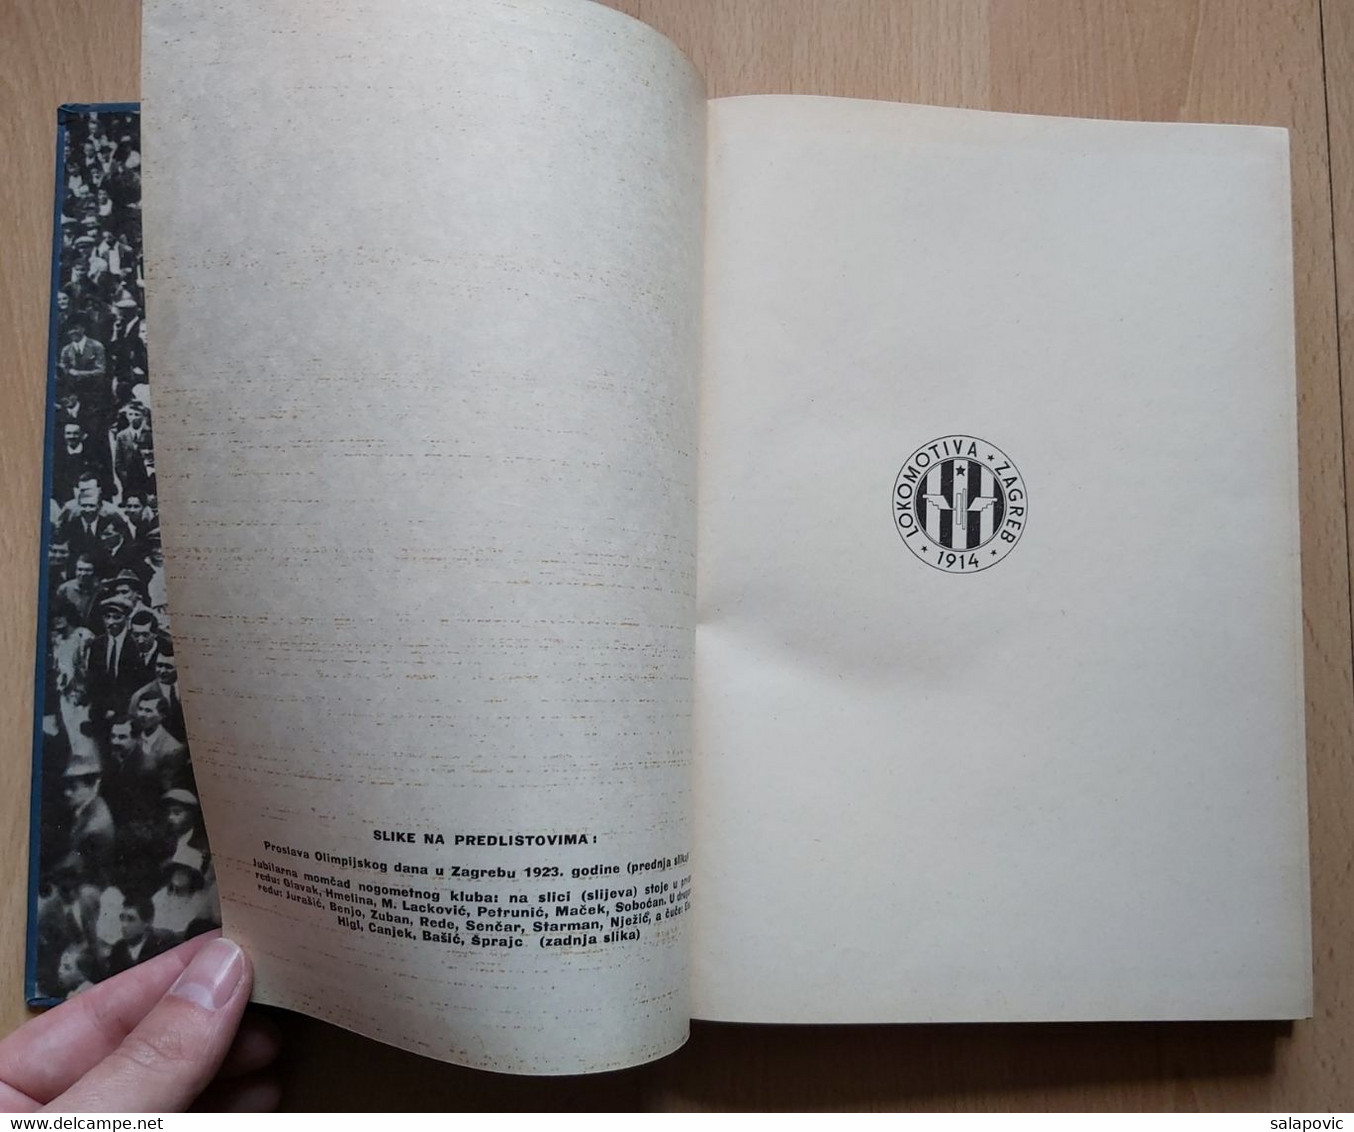 S.D. Lokomotiva 1914-1964 Croatian Football Club - Books